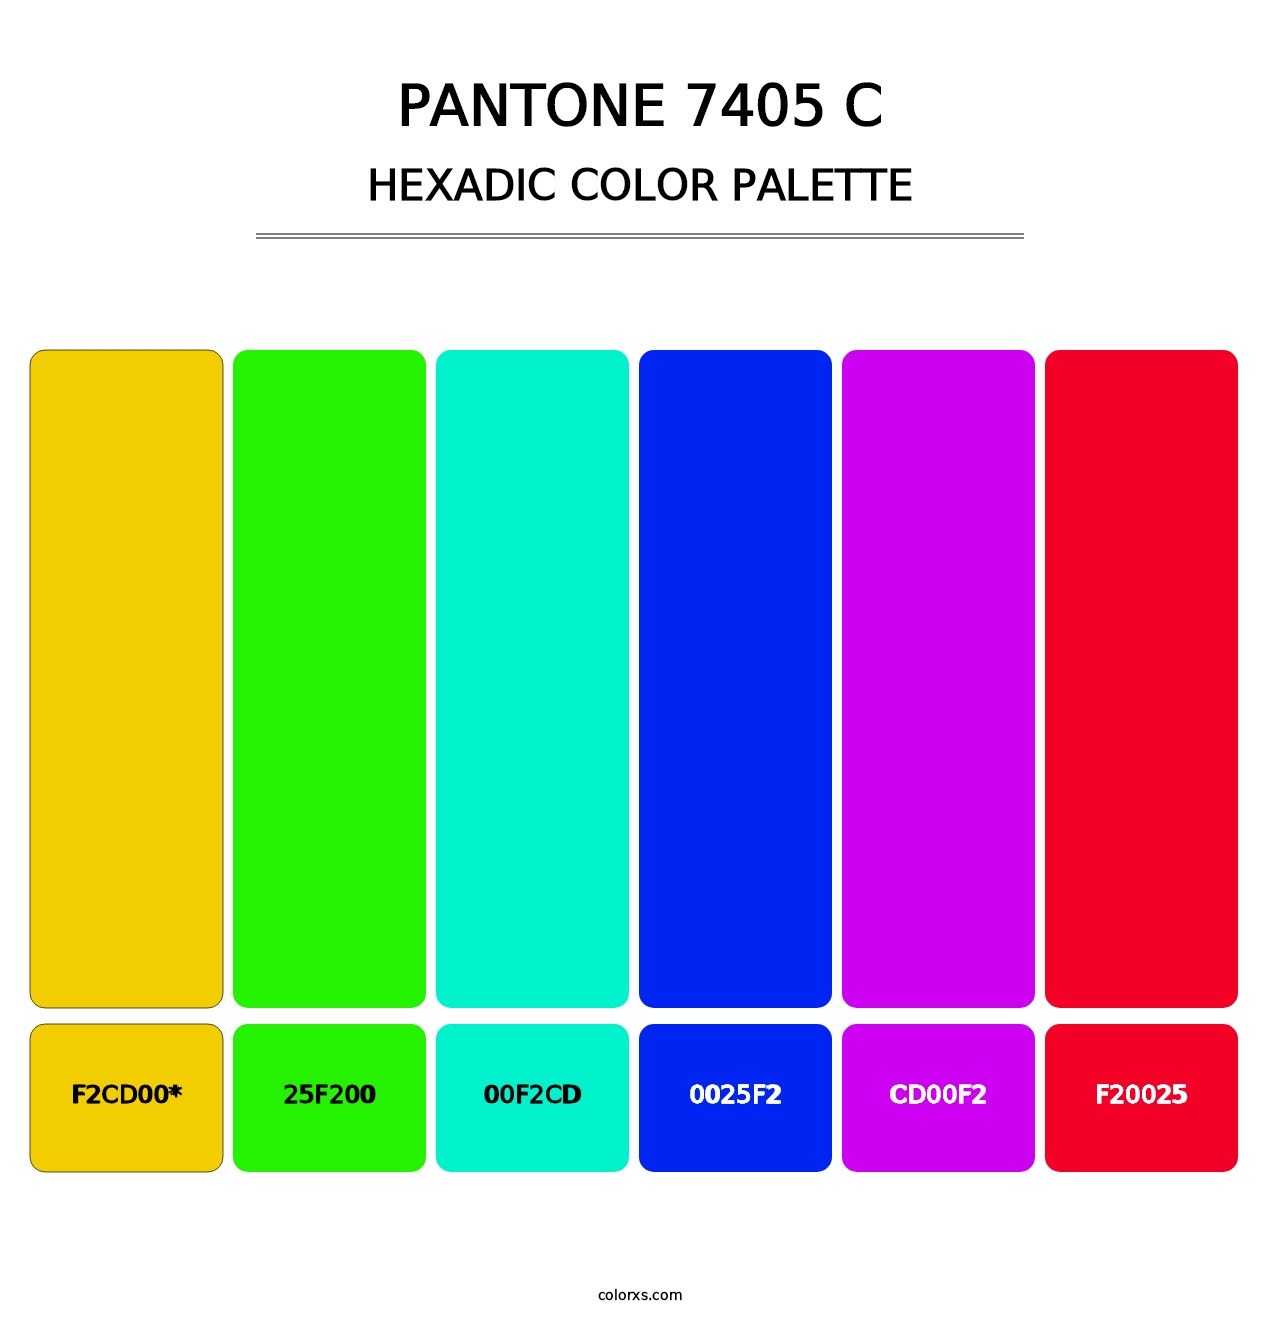 PANTONE 7405 C - Hexadic Color Palette